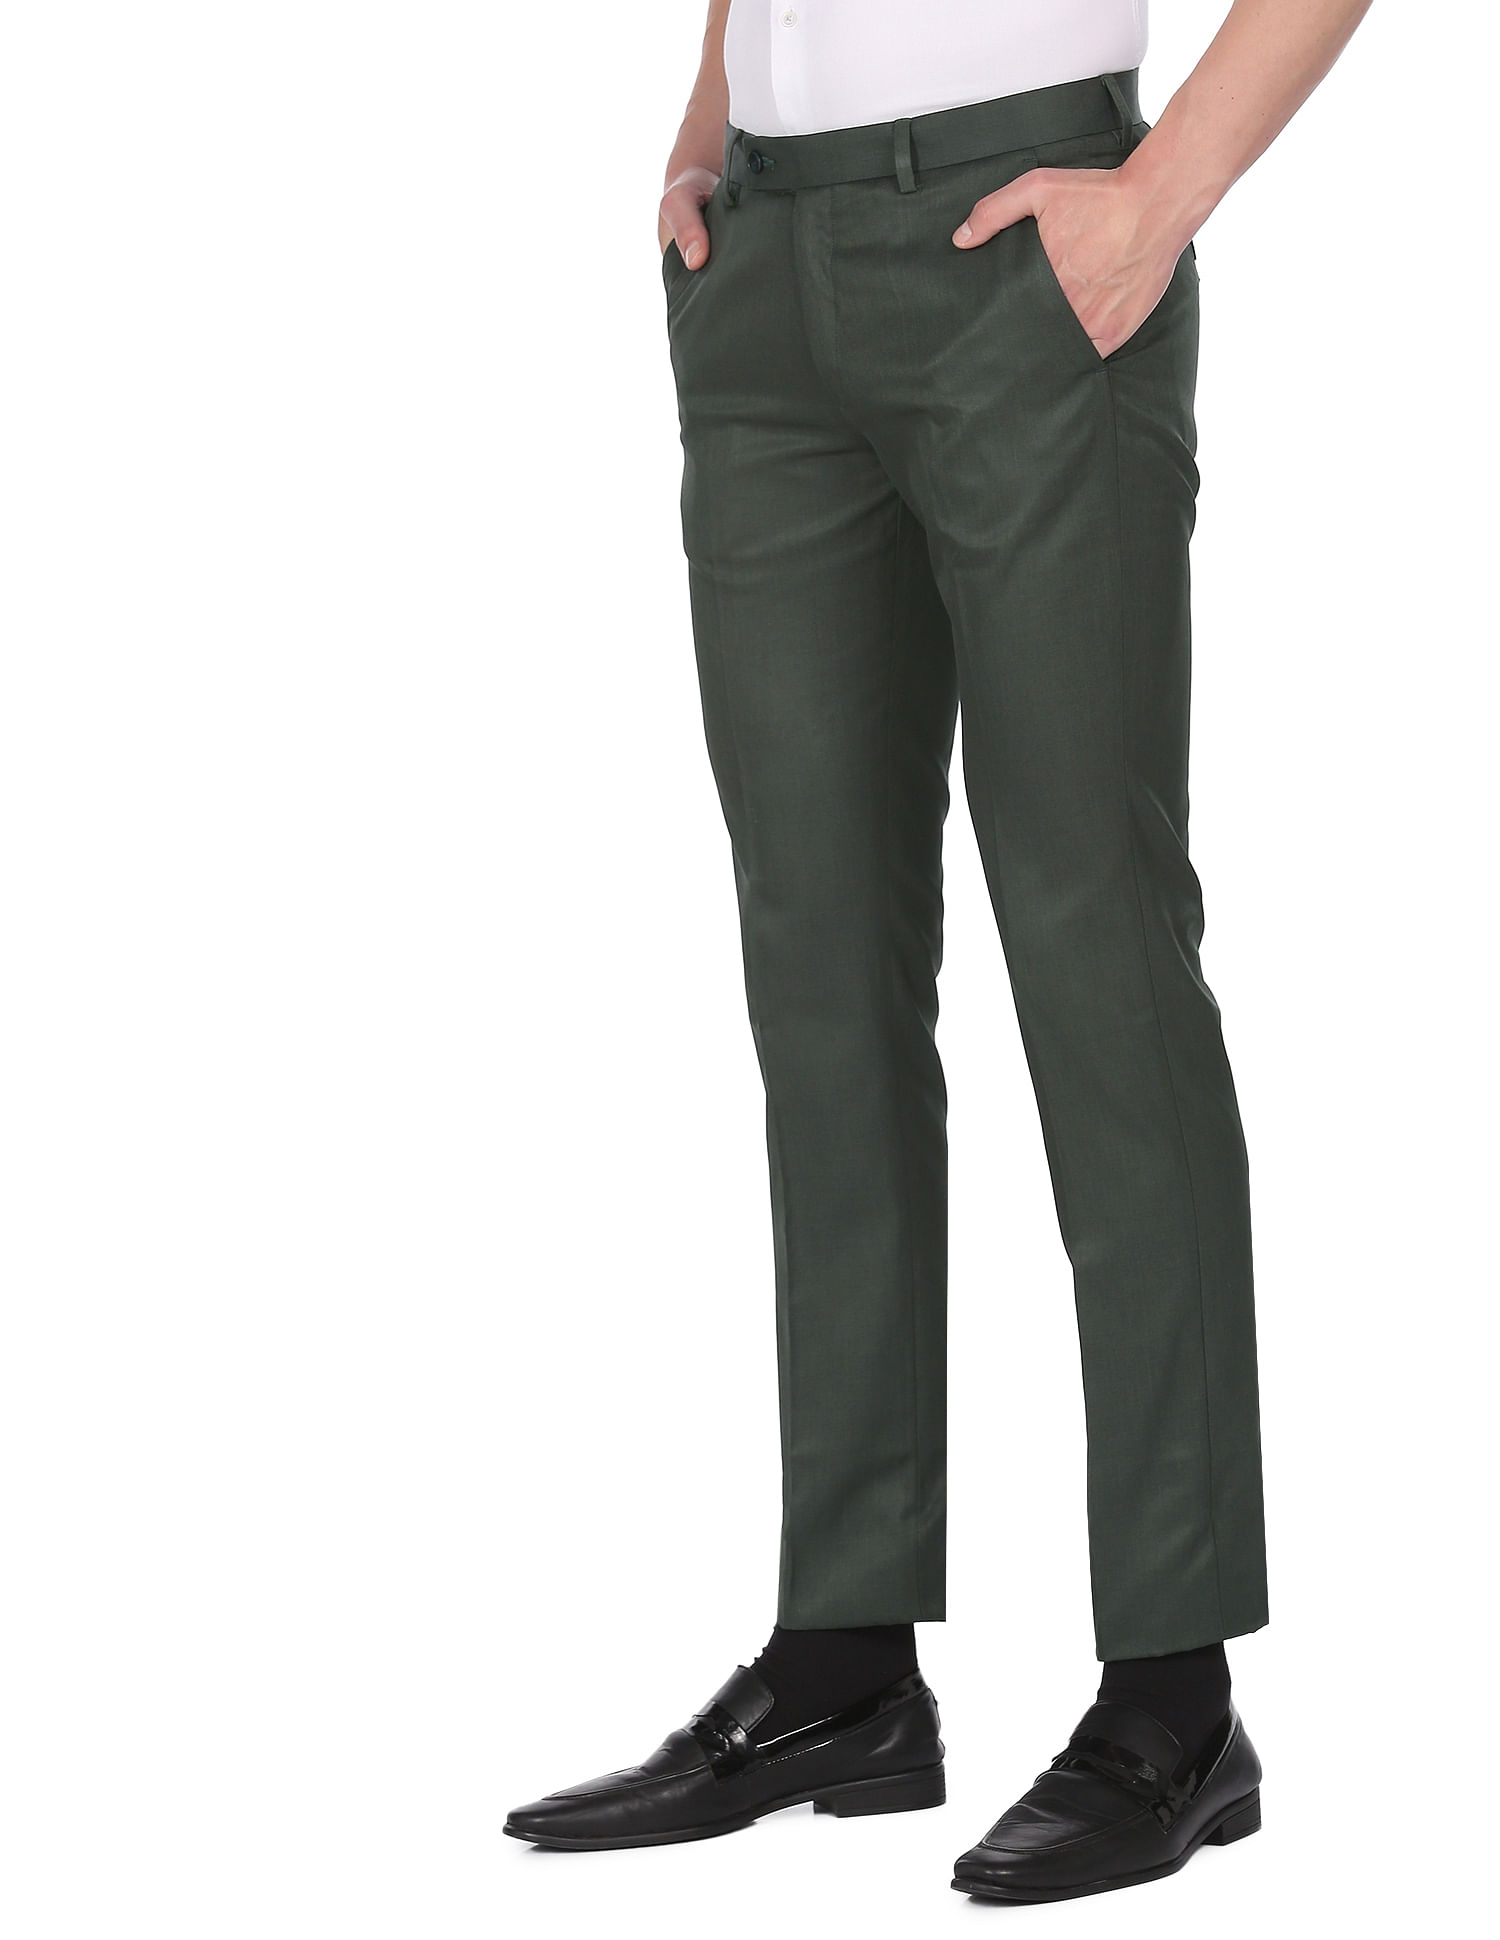 Buy Green Trousers  Pants for Men by MANQ Online  Ajiocom